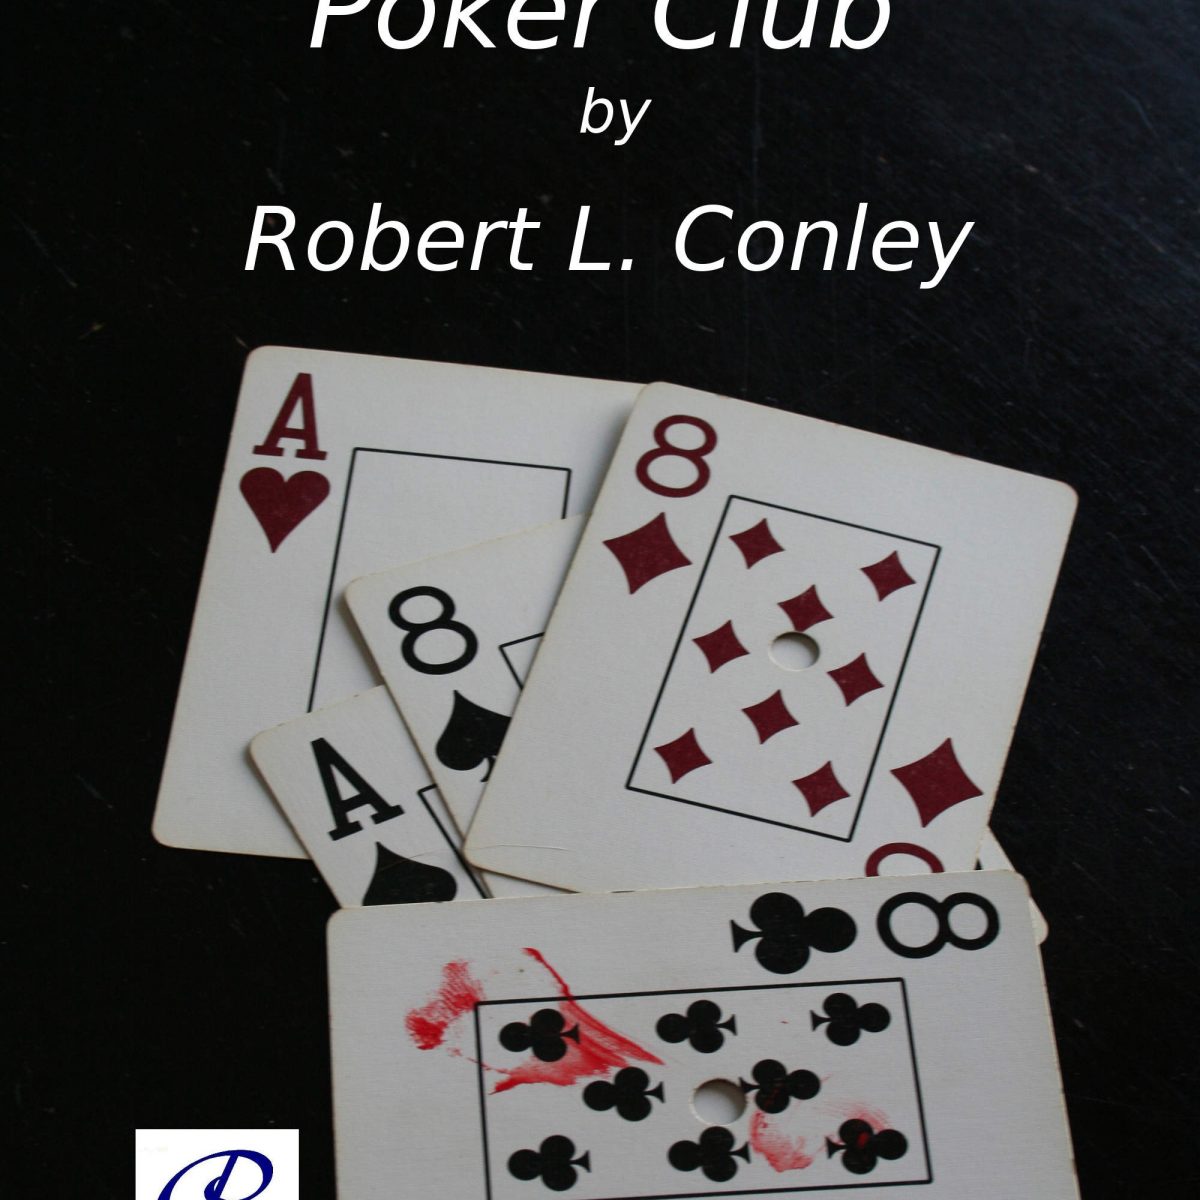 The Friday Night Poker Club by Robert L. Conley